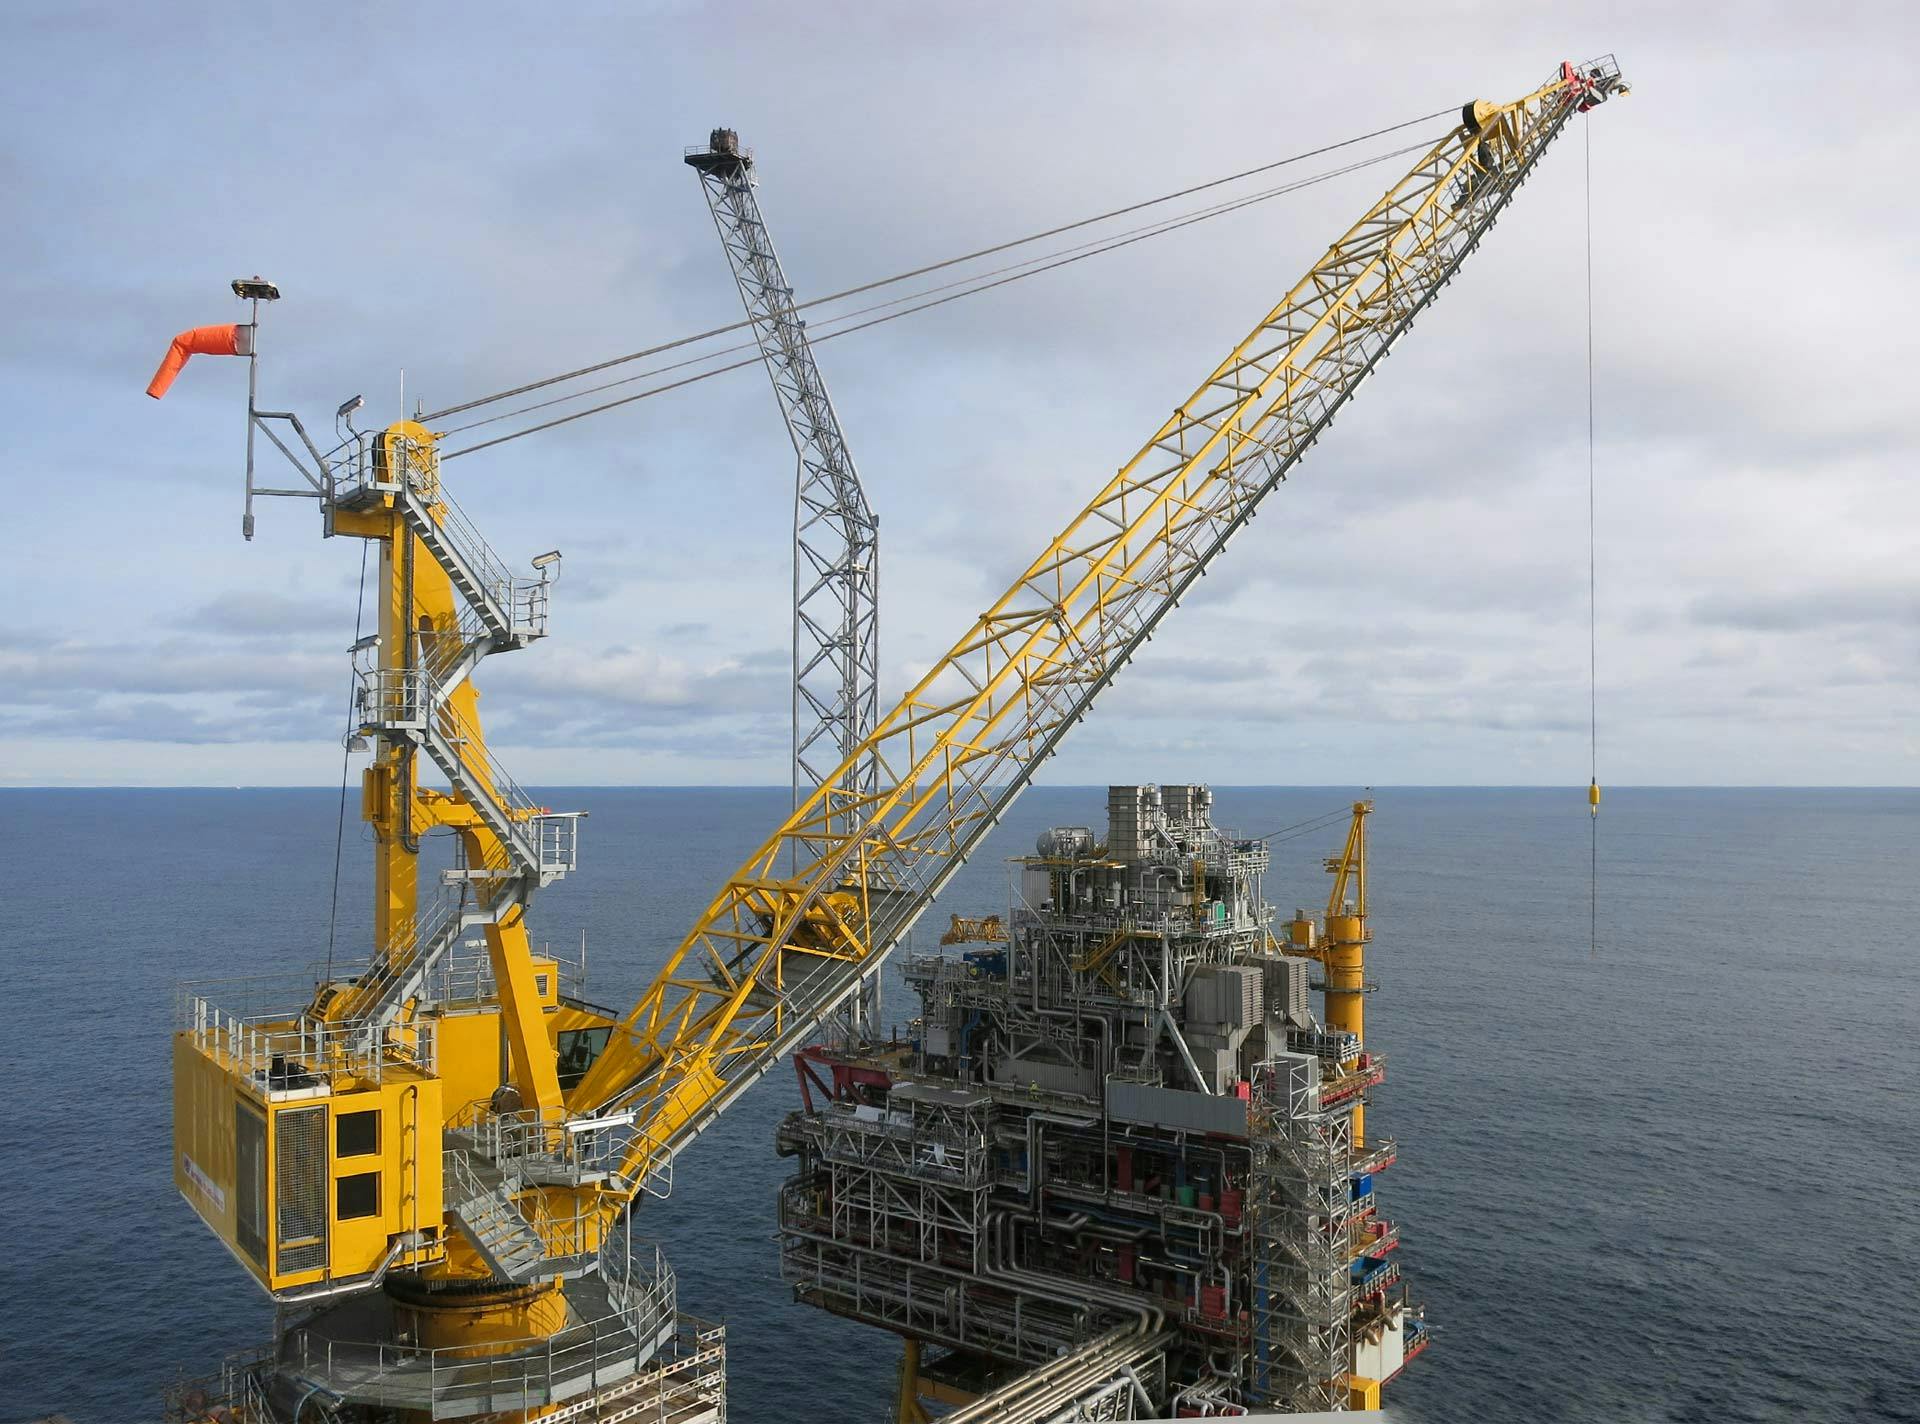 Crane on an offshore platform